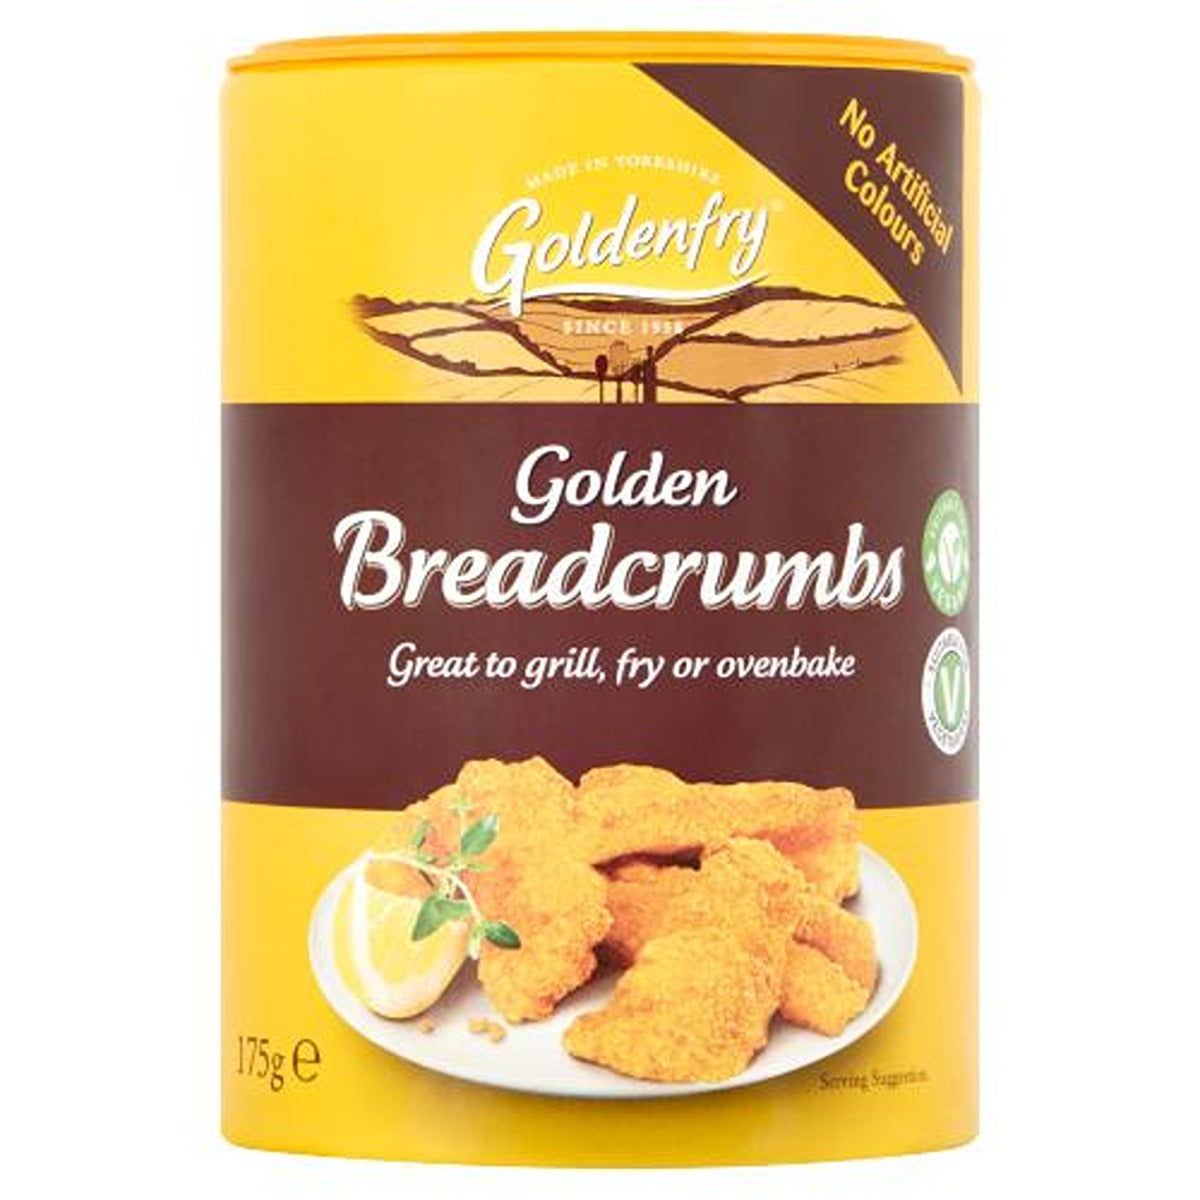 Goldenfry - Golden Breadcrumbs - 175g - Continental Food Store